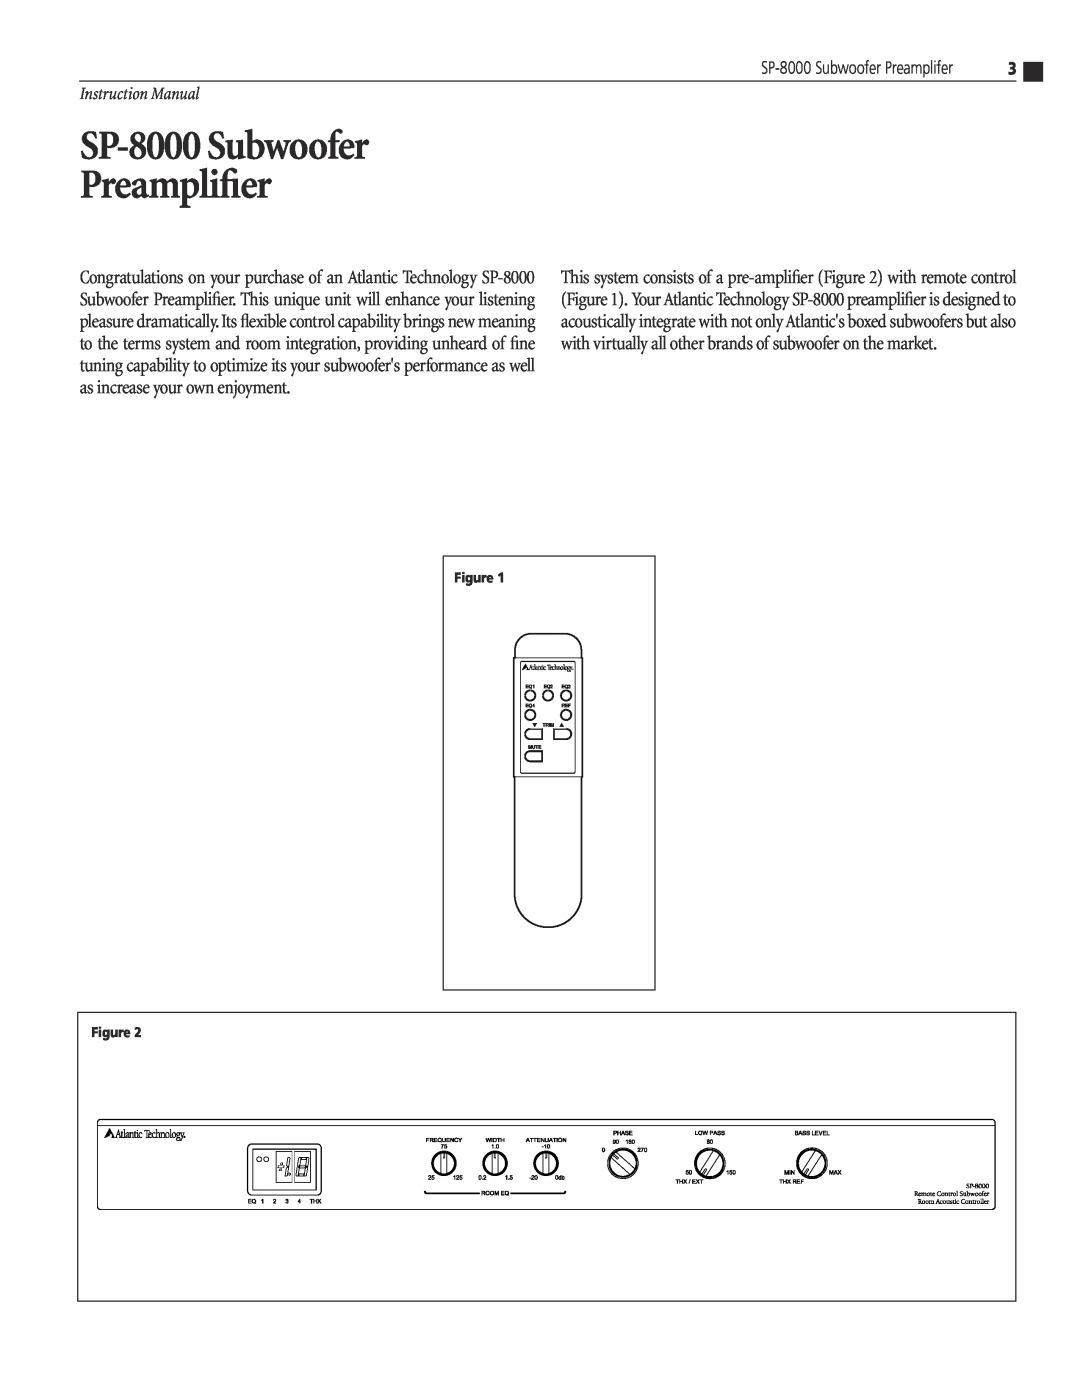 Atlantic Technology instruction manual SP-8000Subwoofer Preamplifier 